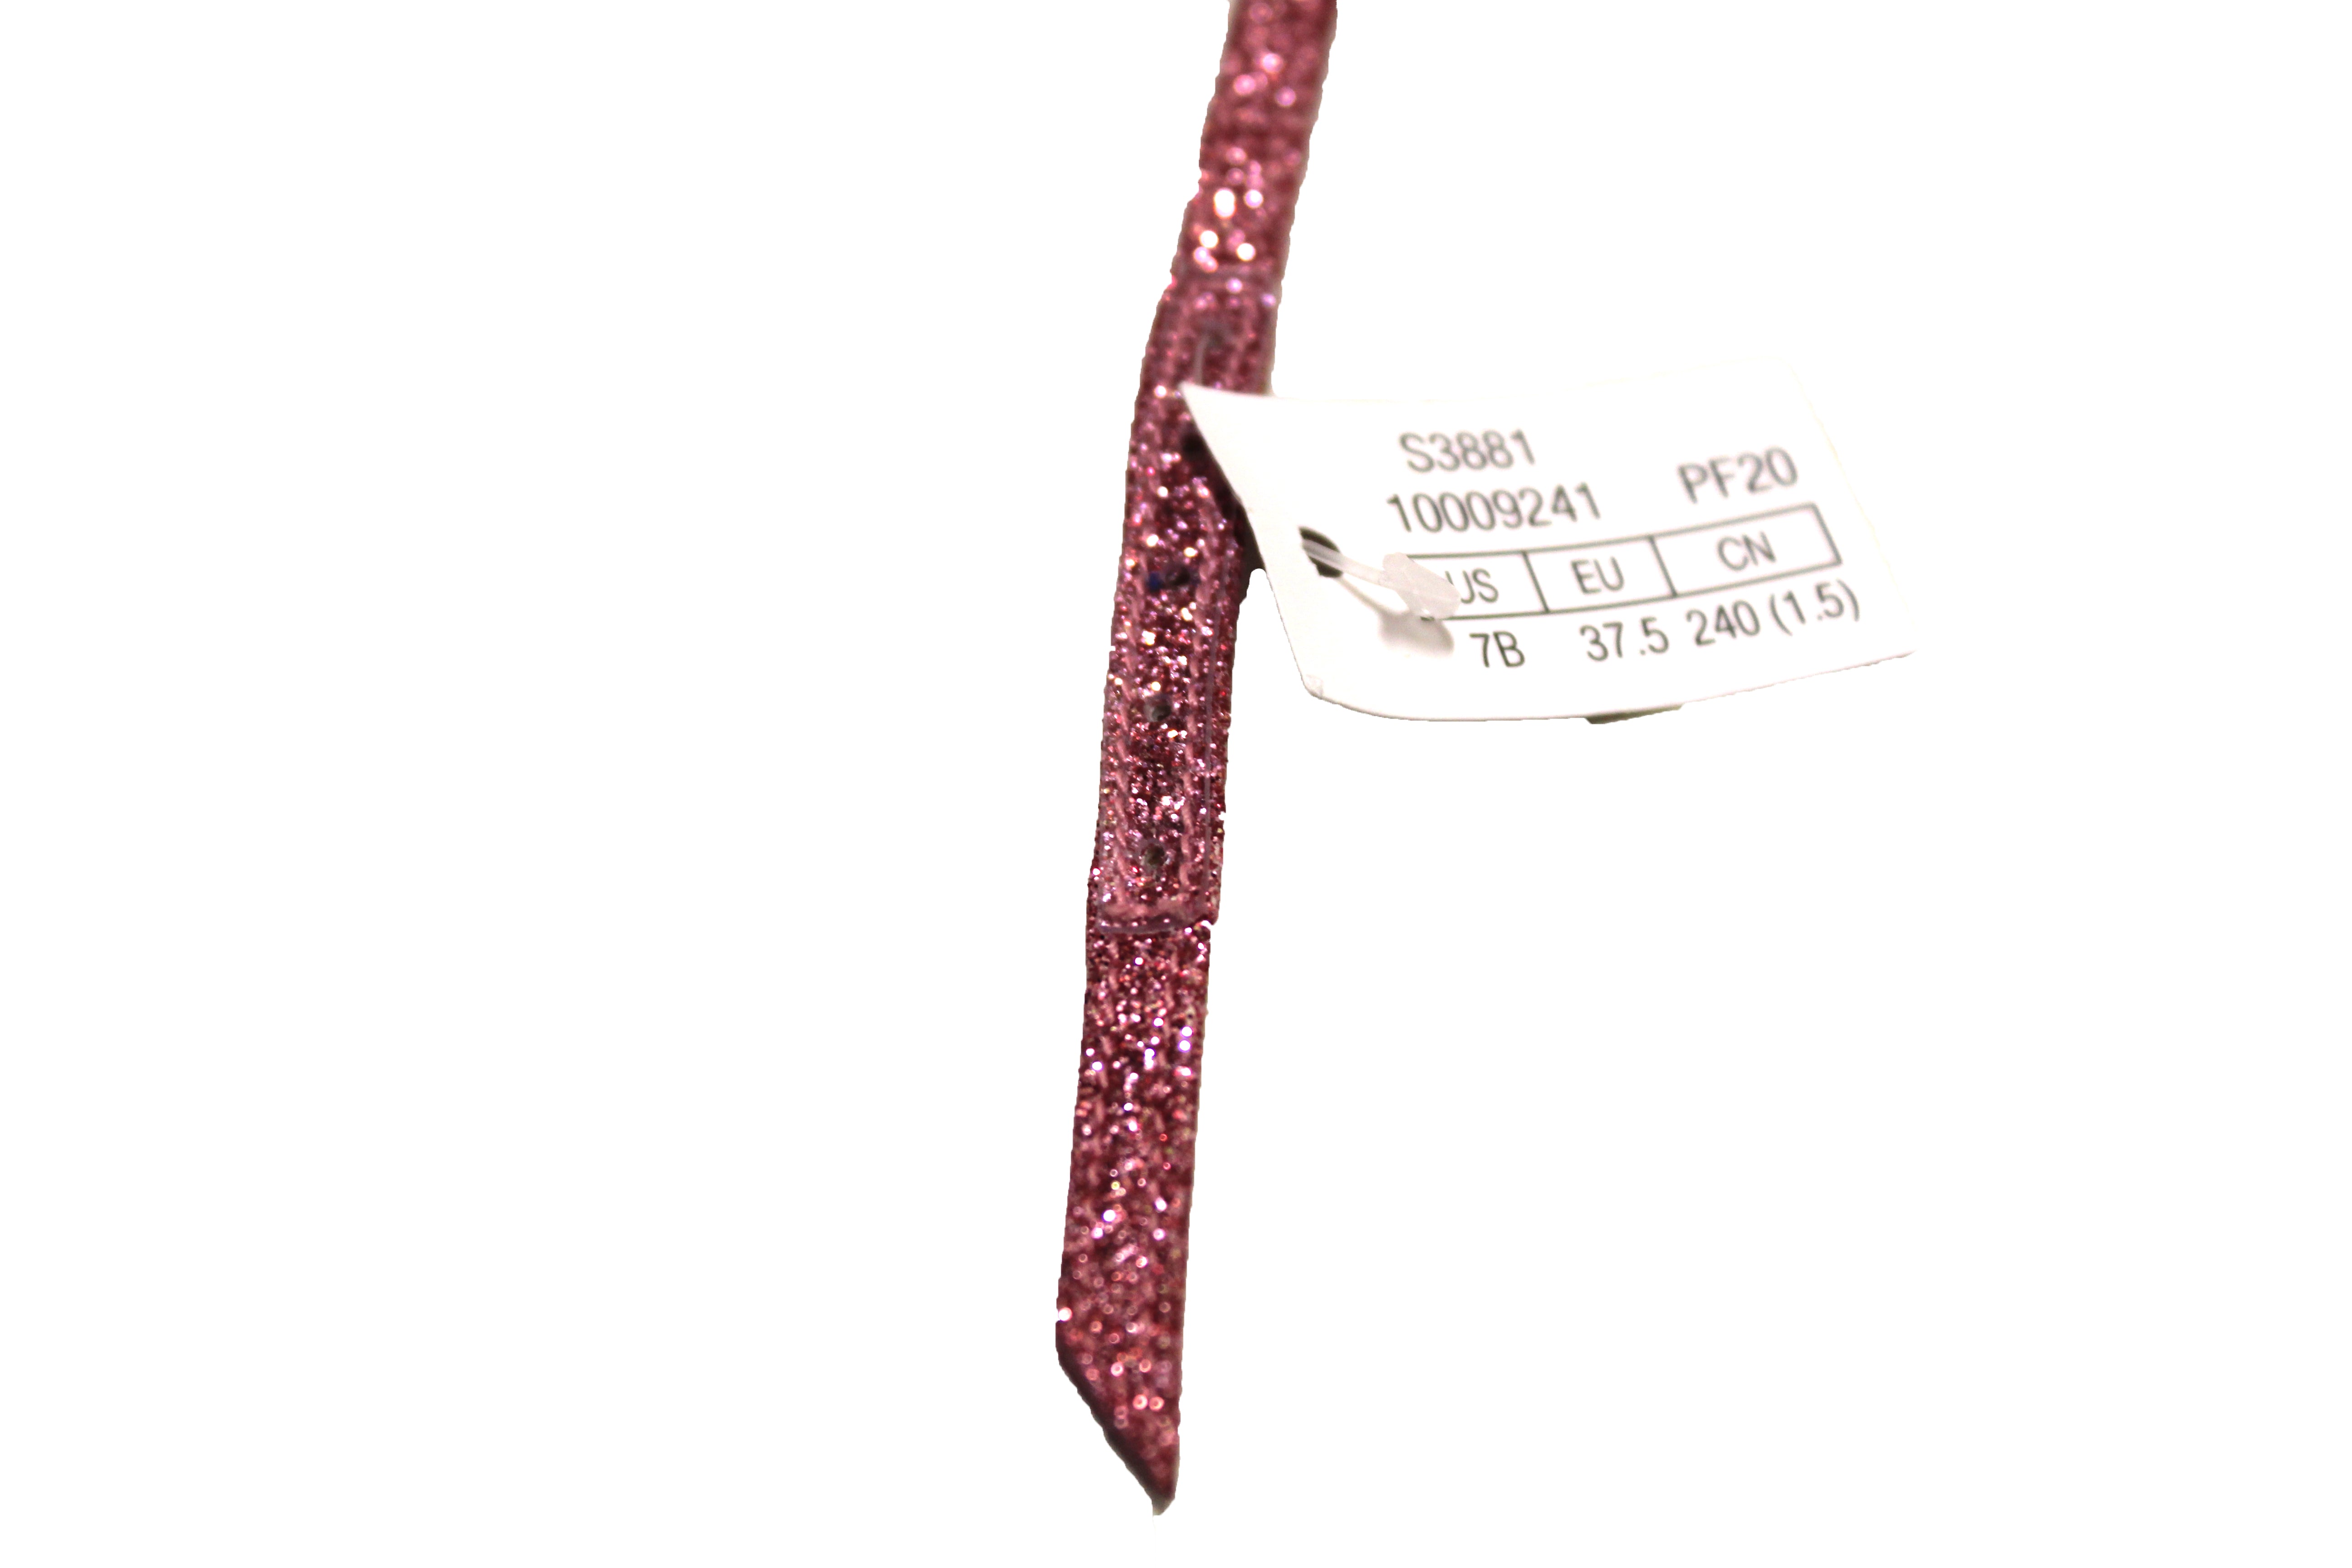 Authentic NEW Stuart Weitzman Glitter Pink Julina High-Heel Strappy Sandals Size 7